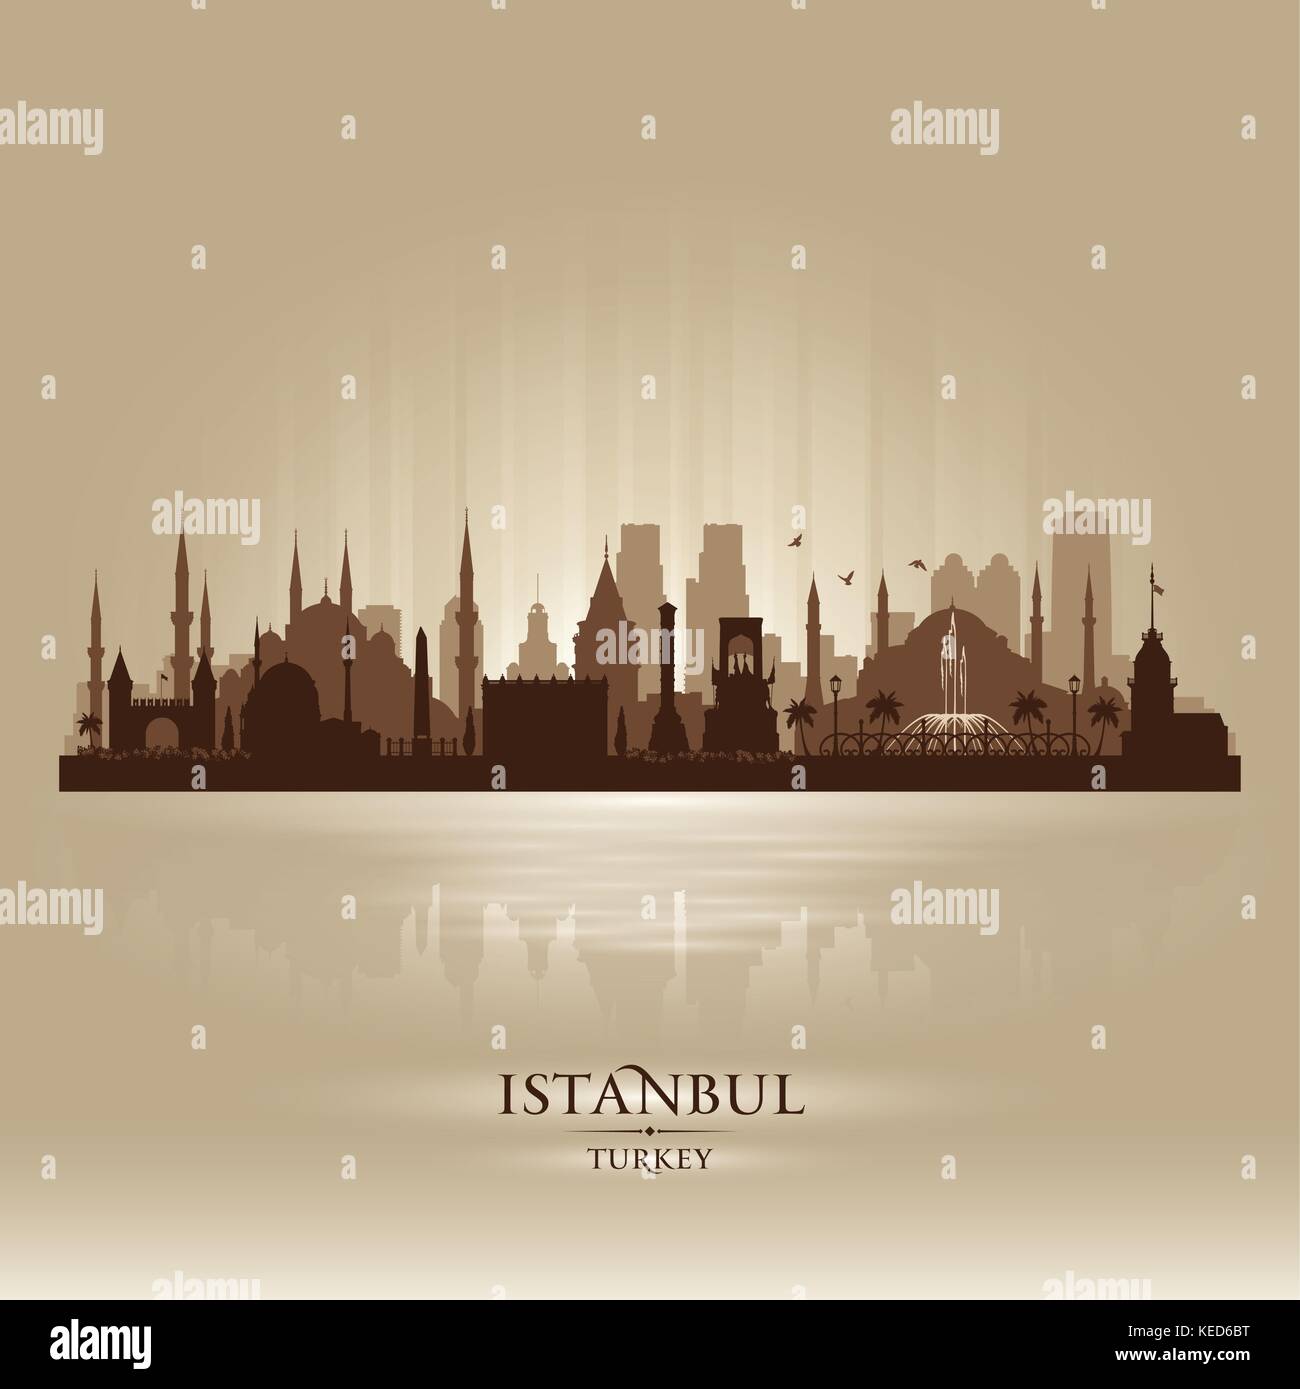 Istanbul Turkey city skyline vector silhouette illustration Stock Vector